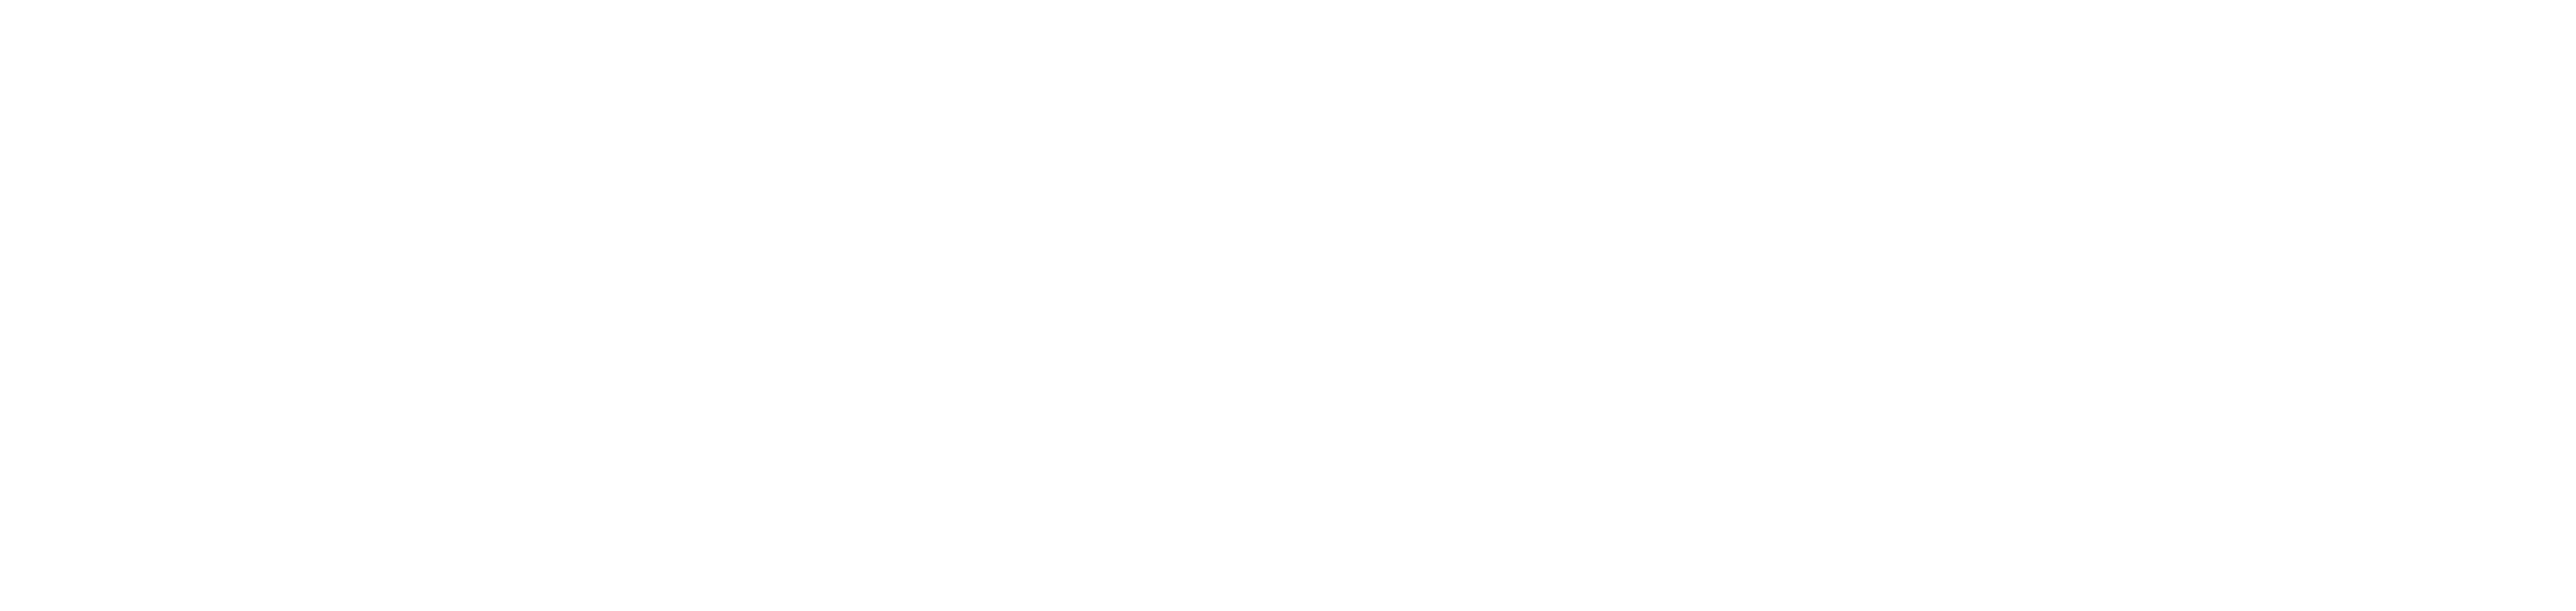 HouseLens